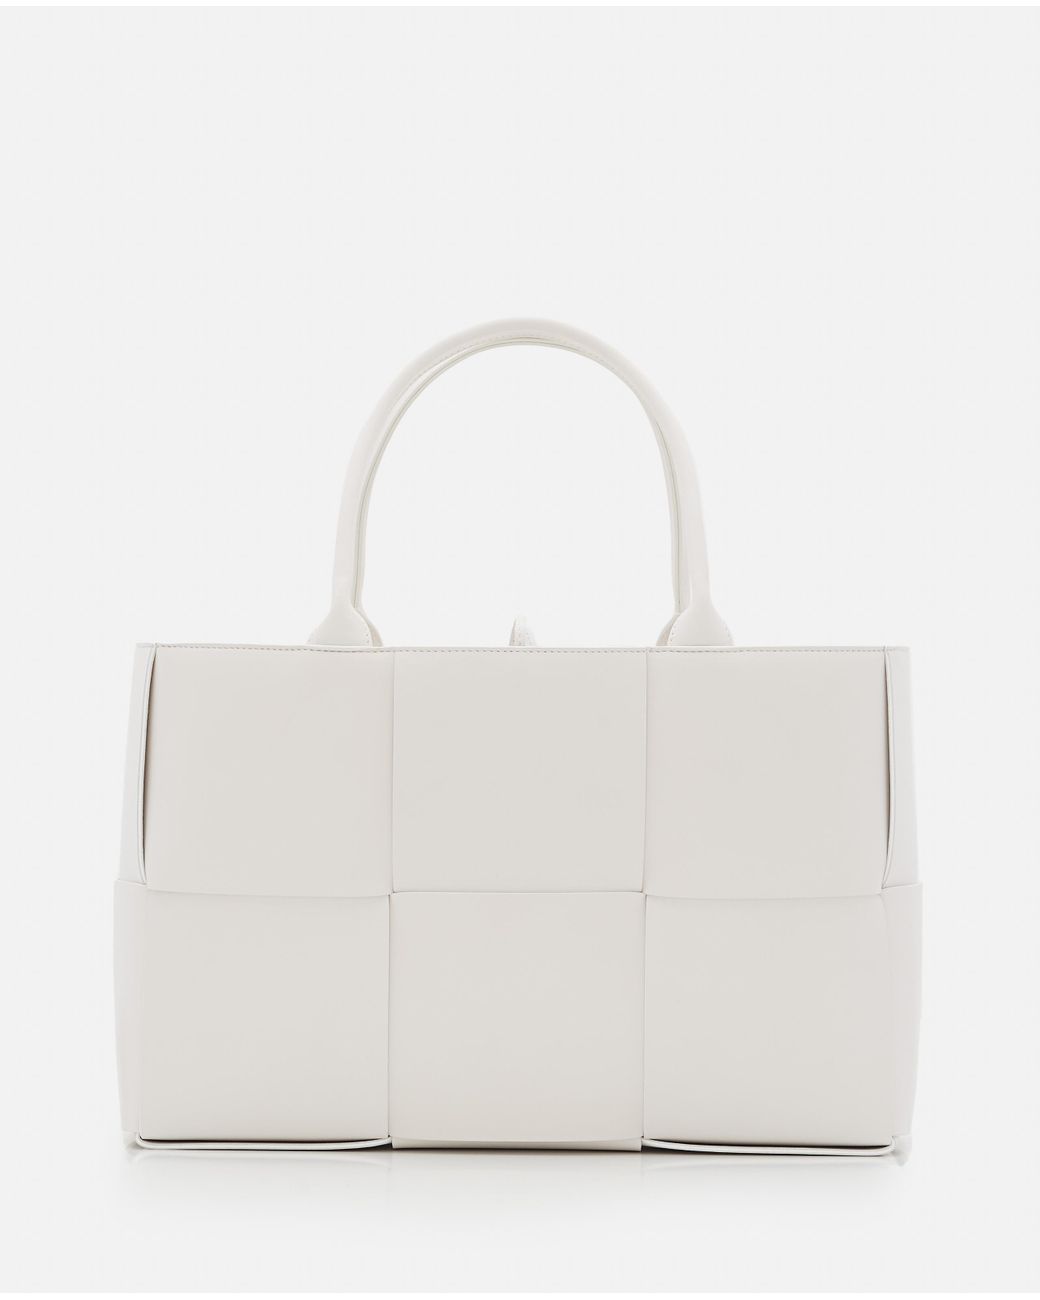 Bottega Veneta Arco Braided Tote Bag in White | Lyst